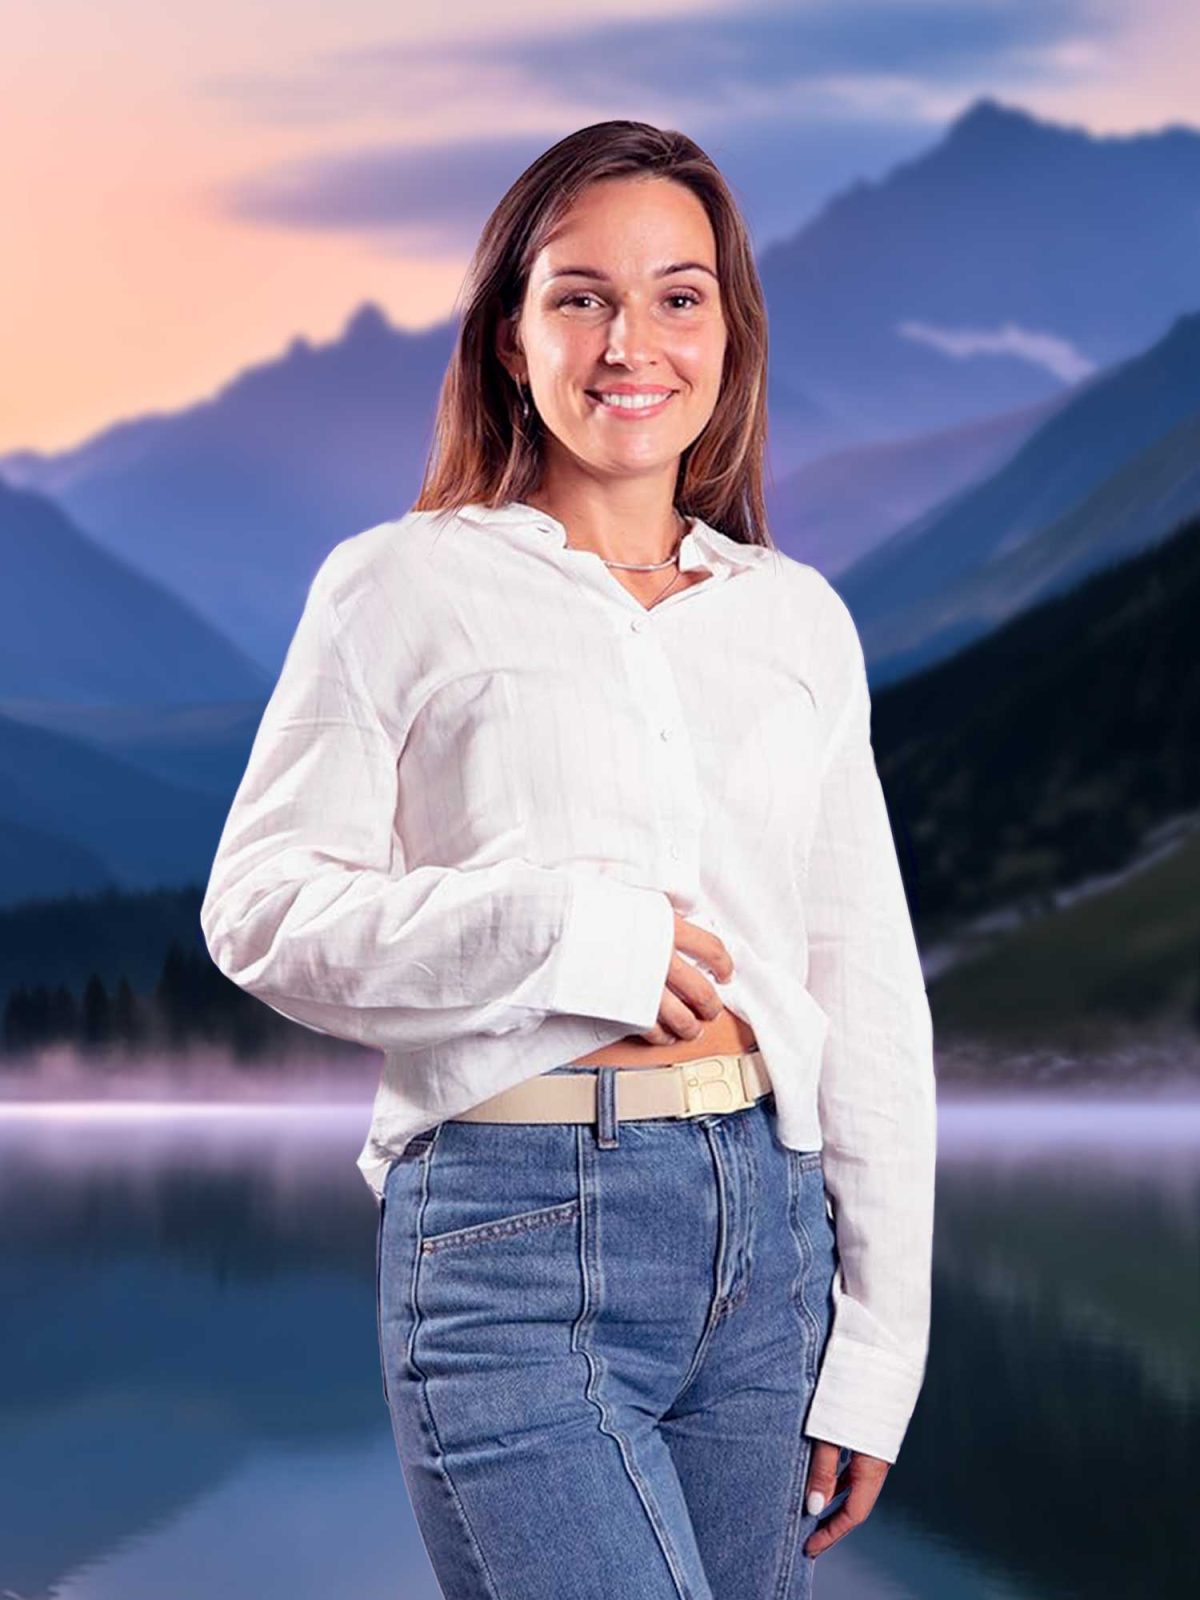 Woman wearing a beltaway belt looking happy in front of a lake